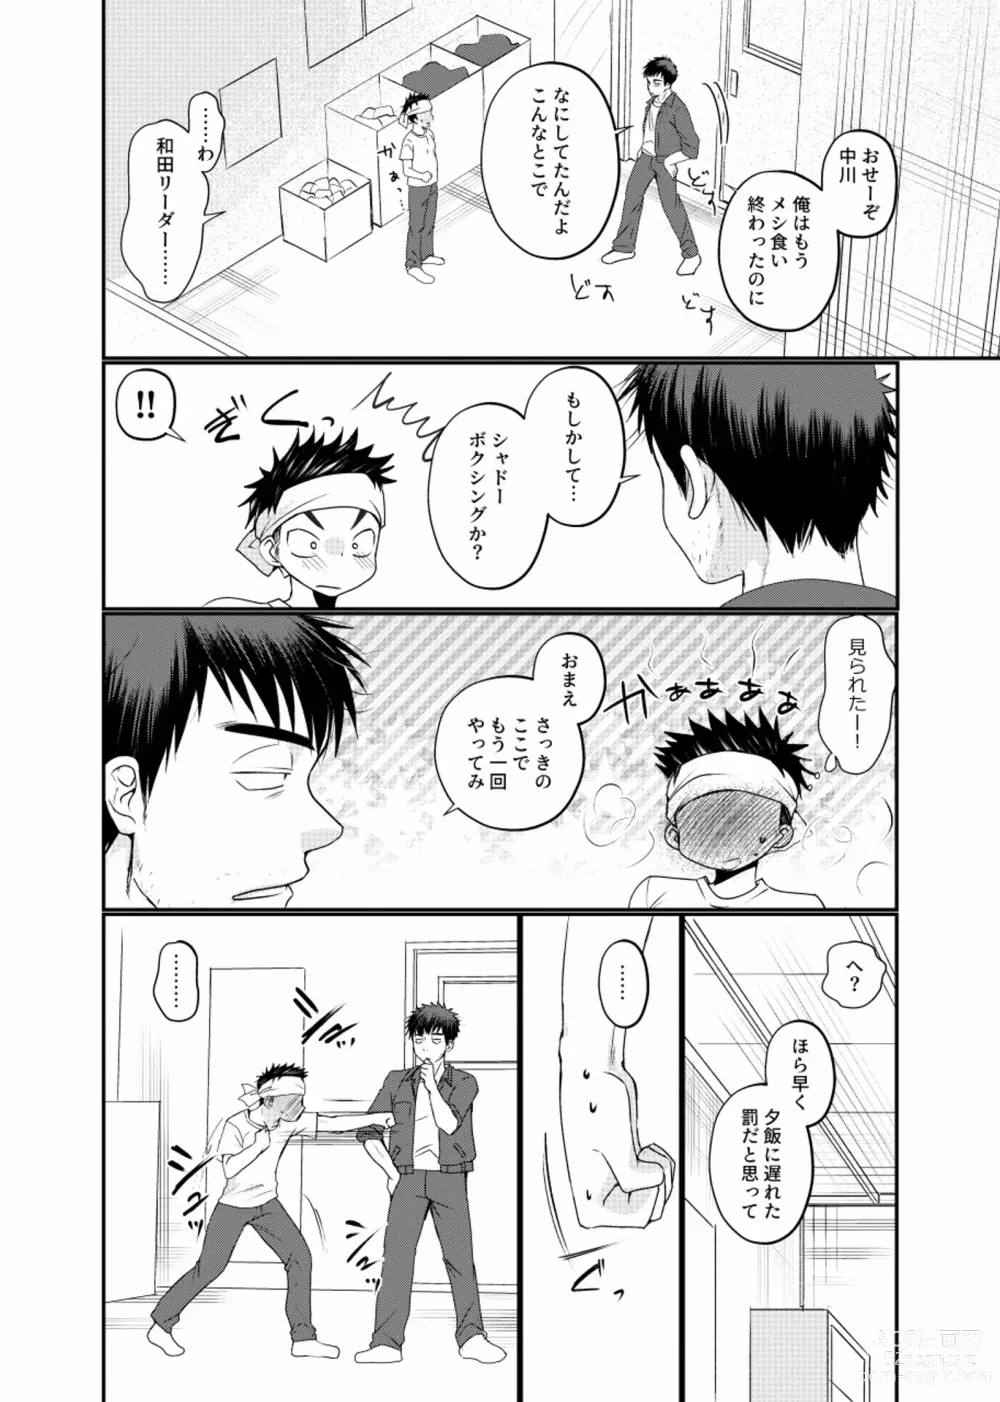 Page 9 of doujinshi 地下労働格闘少年